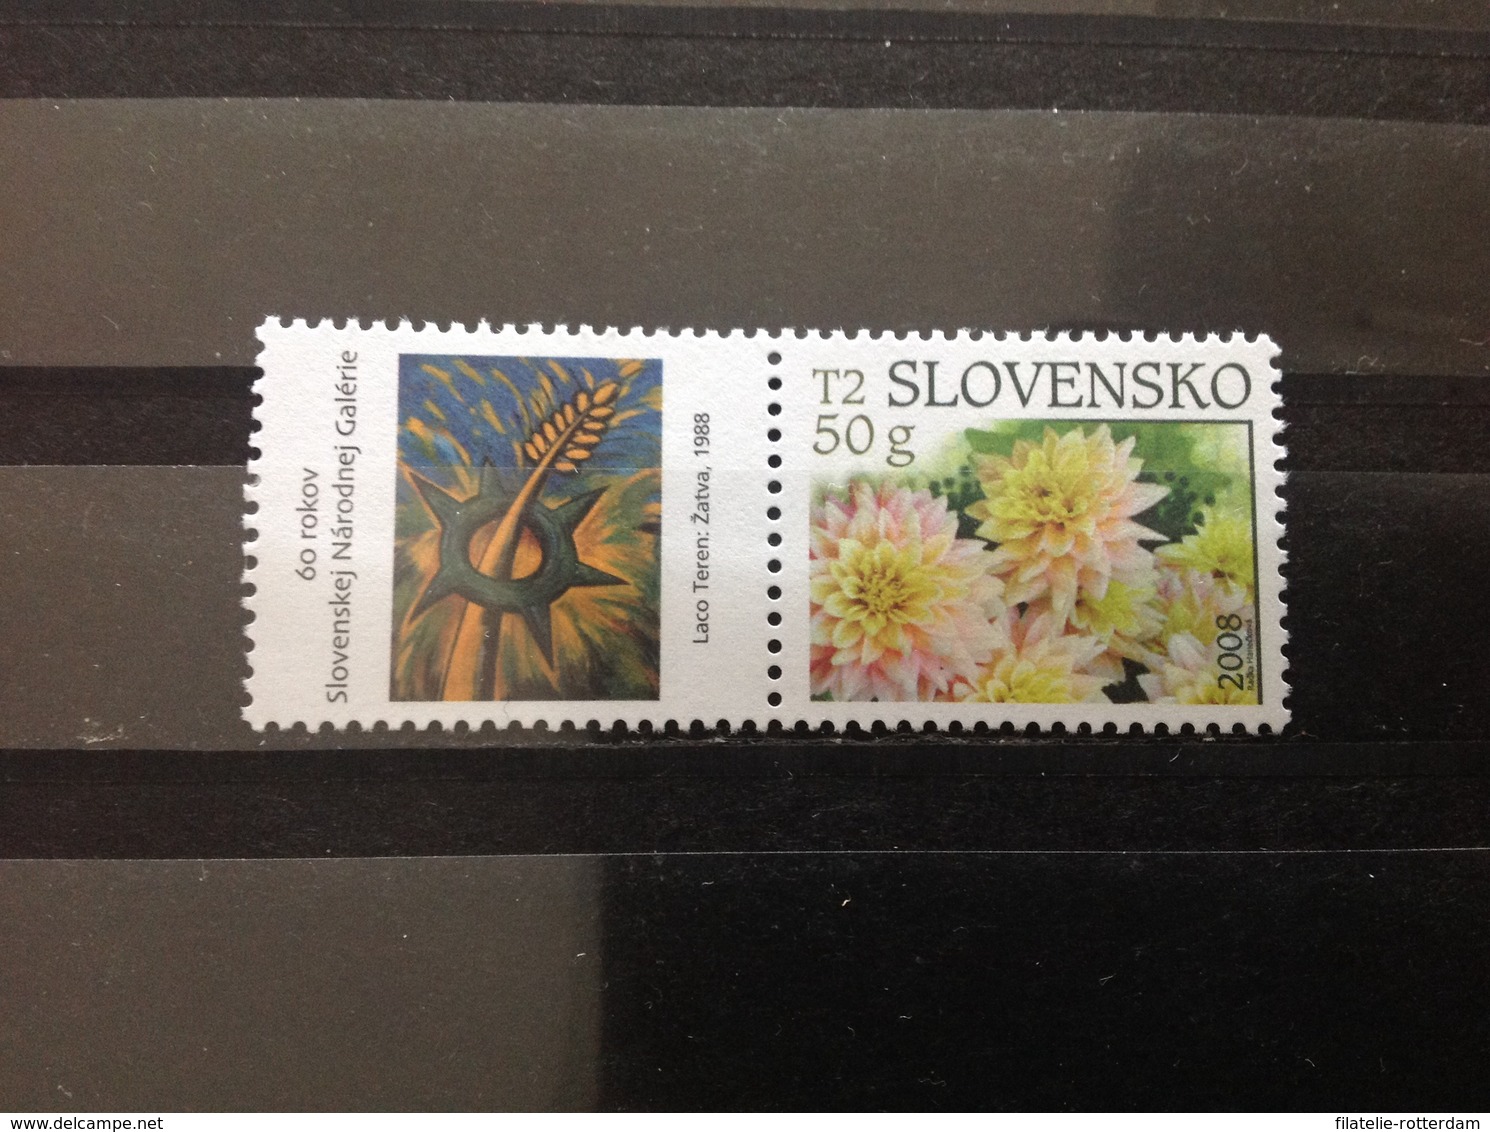 Slowakije / Slovakia - Groetzegel (T2) 2008 - Used Stamps